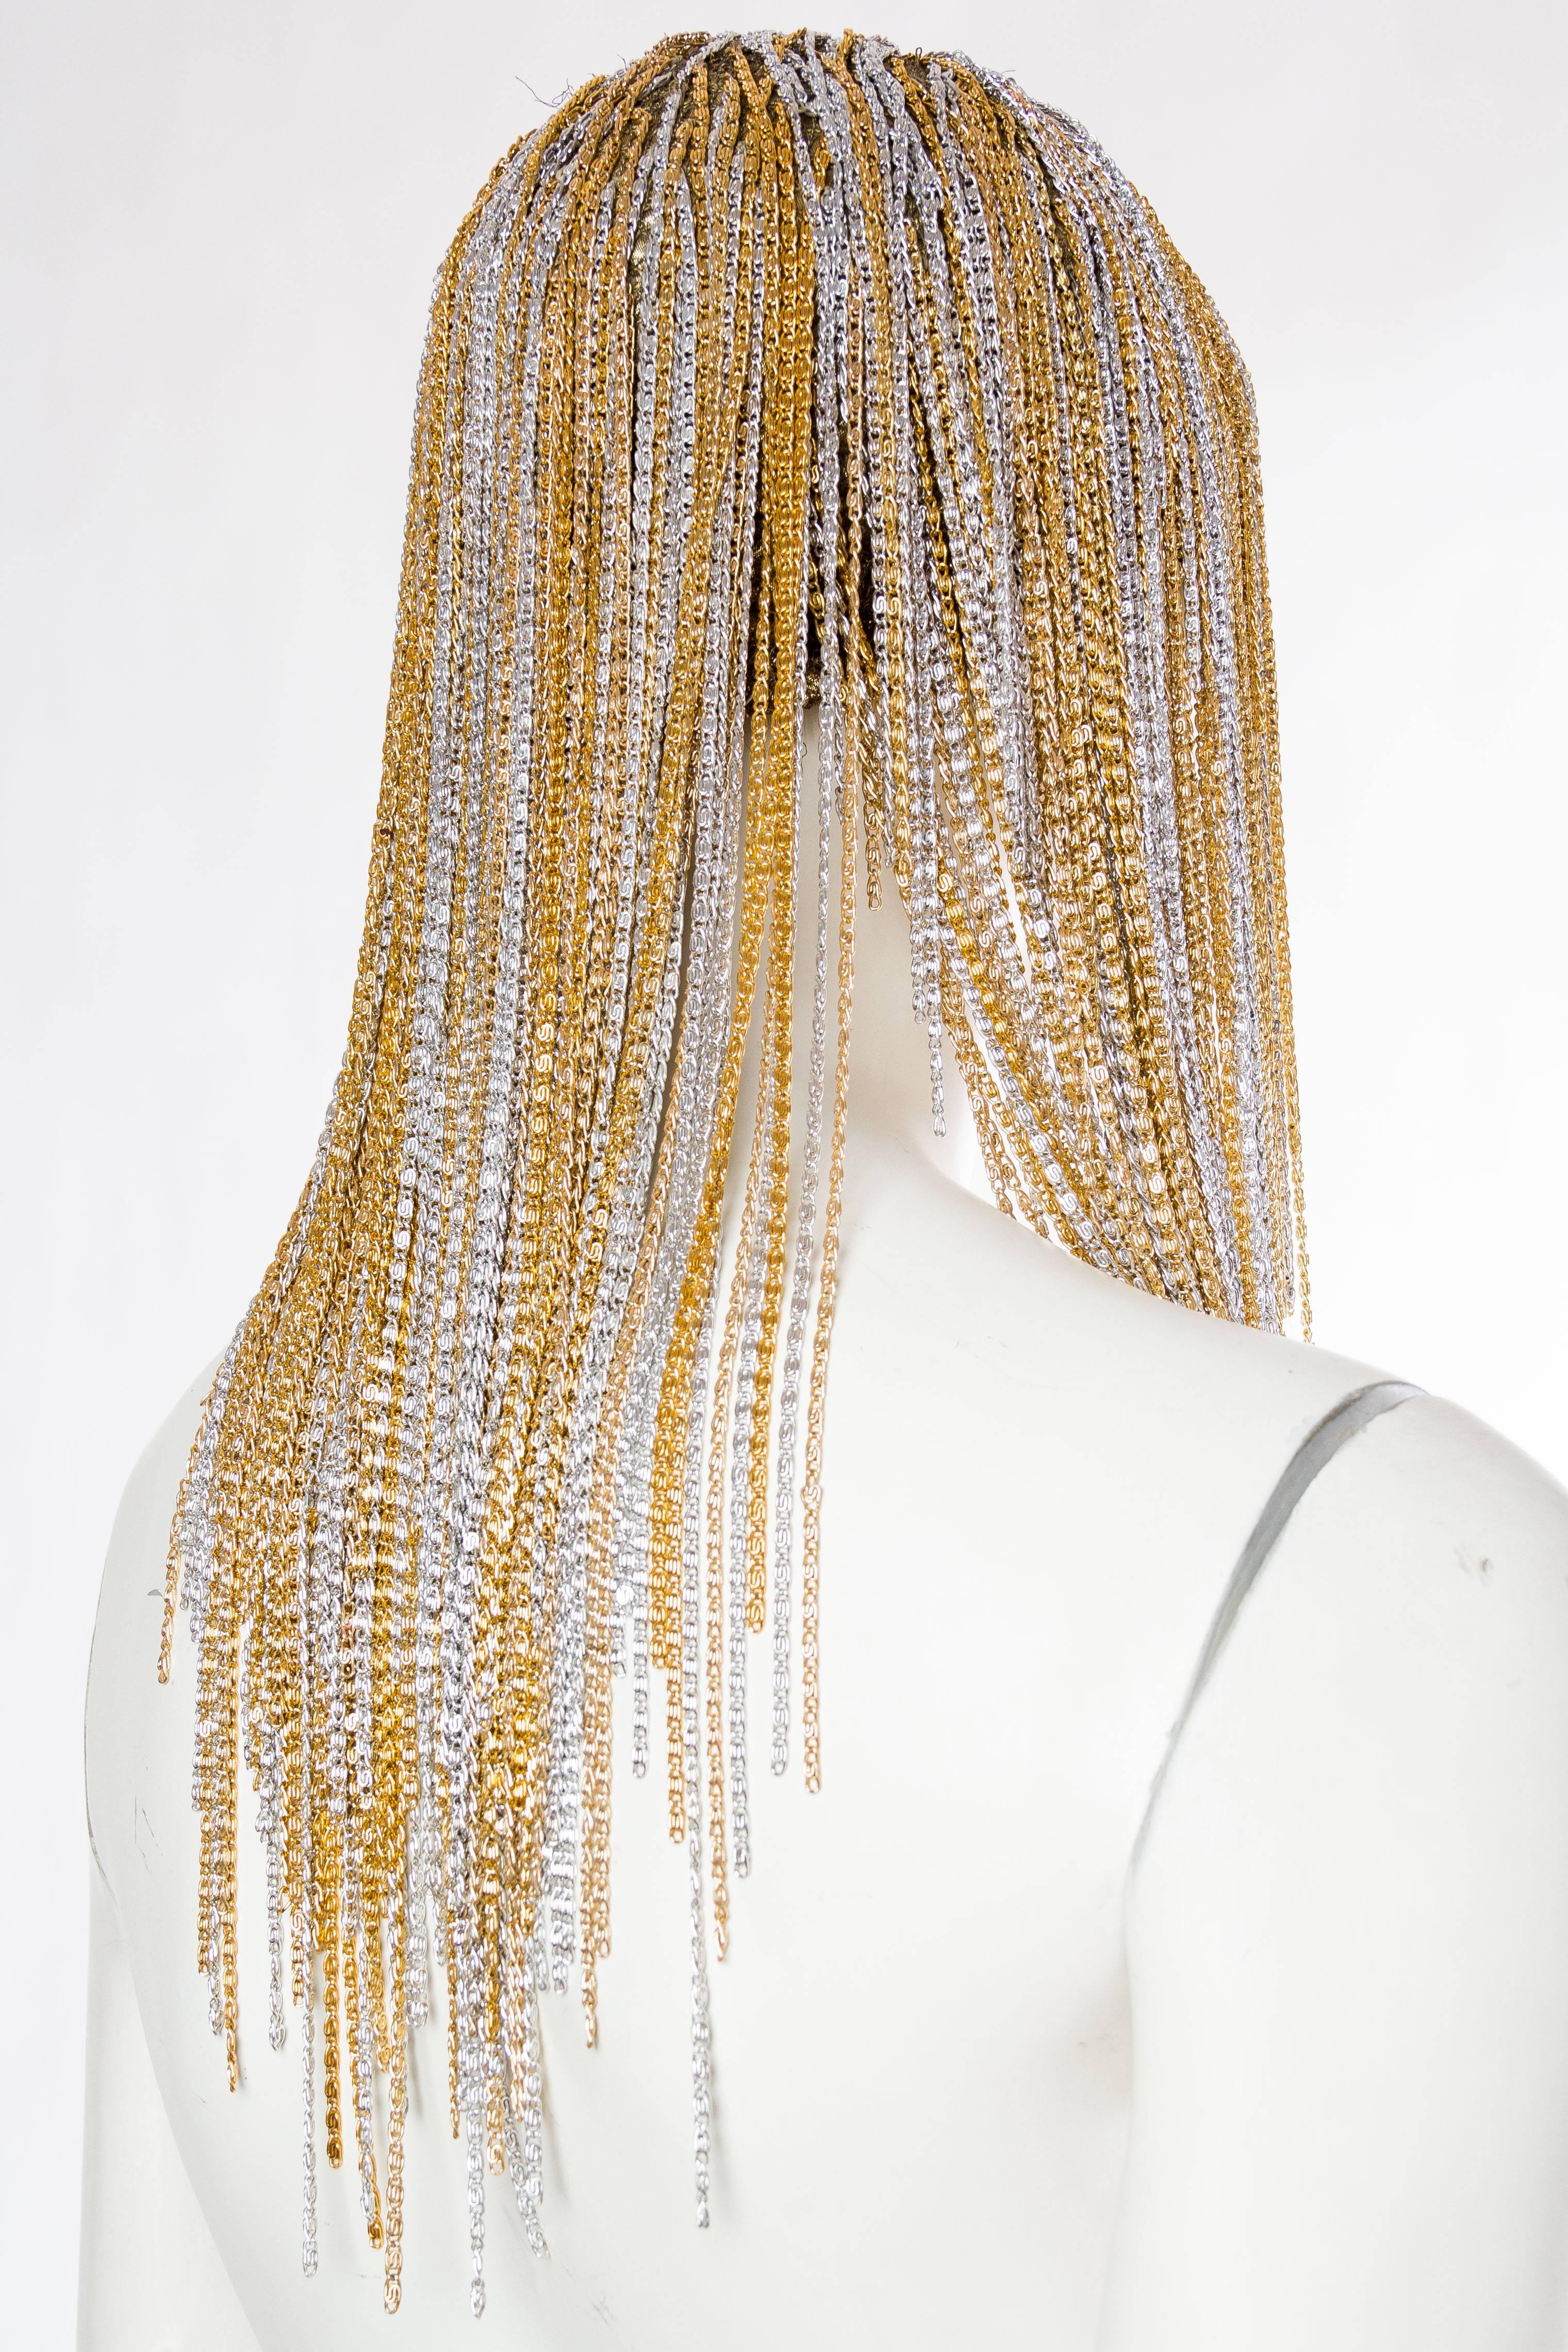 gold metal wig